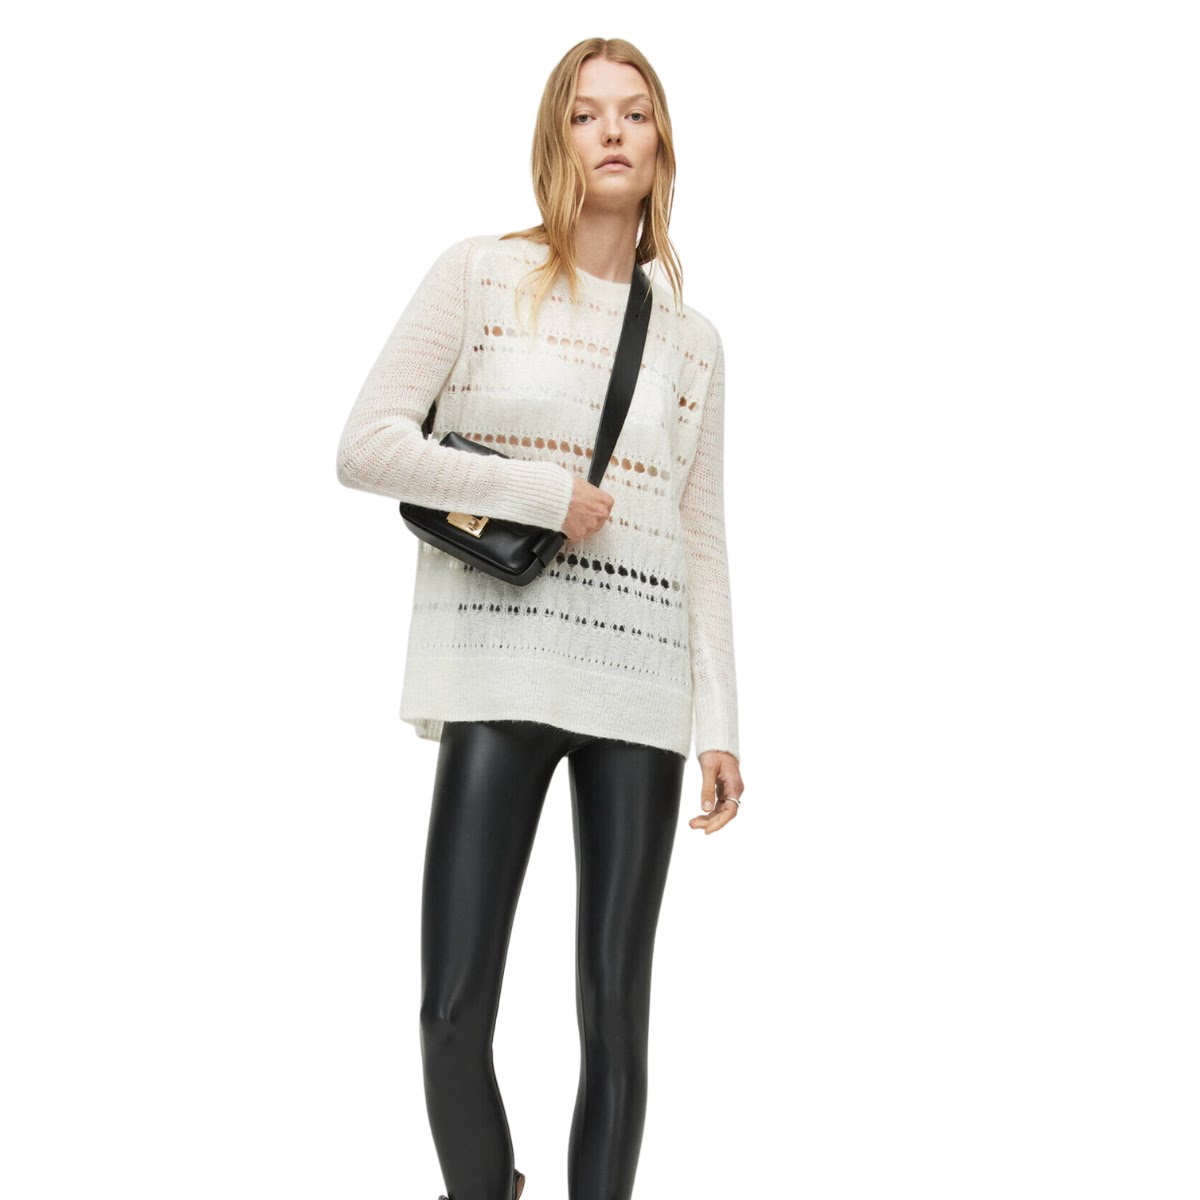 Cora Leather Look High-Rise Leggings, €185